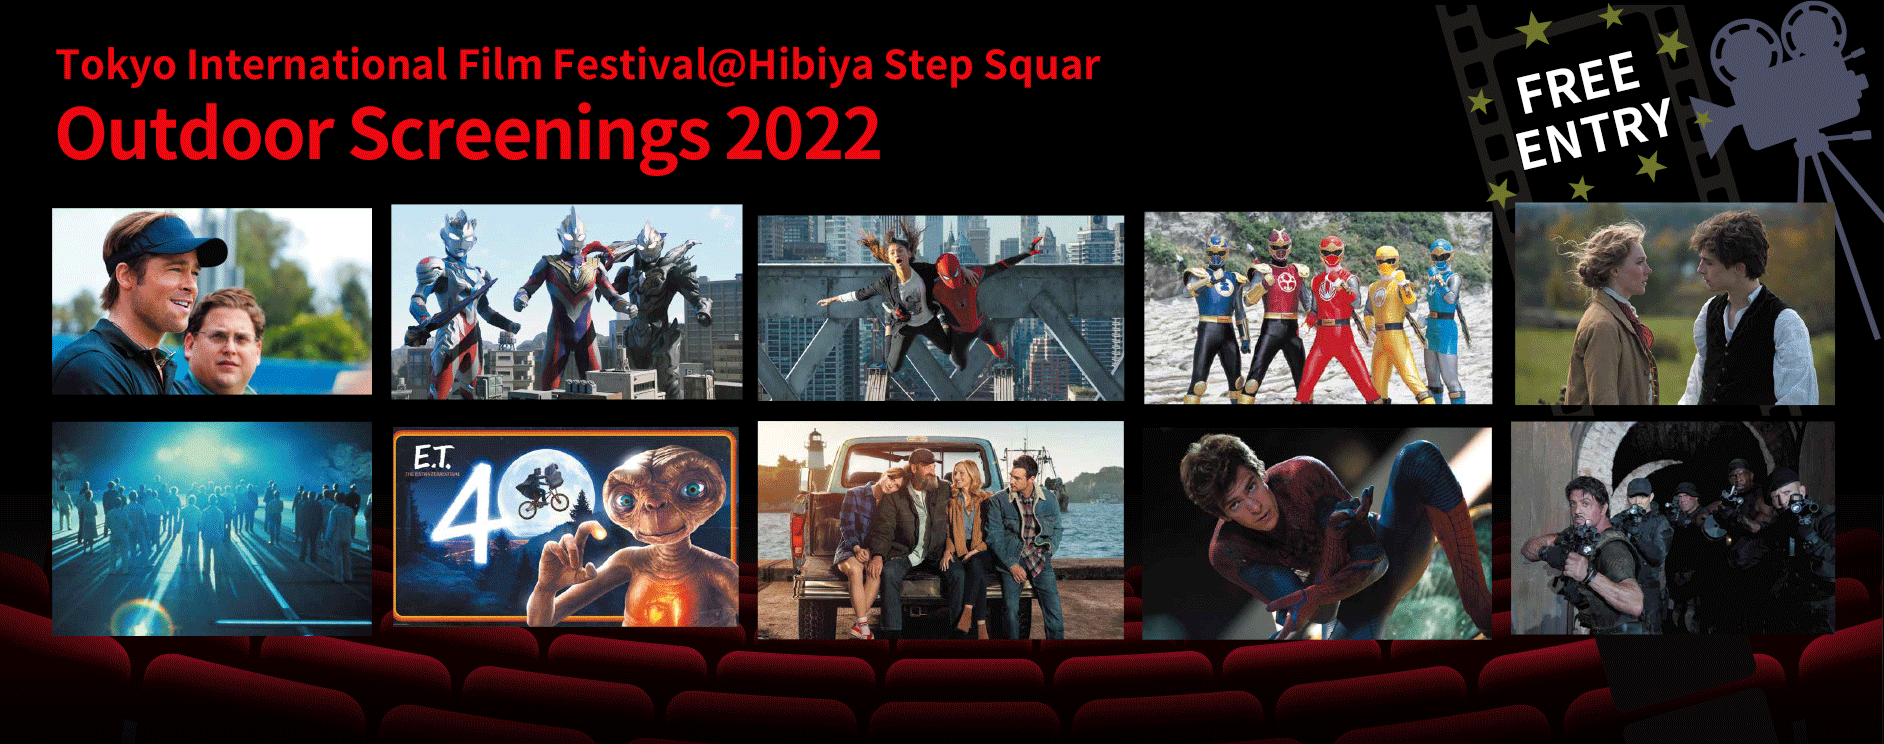 Tokyo International Film Festival@Hibiya Step Square Outdoor Screenings 2022